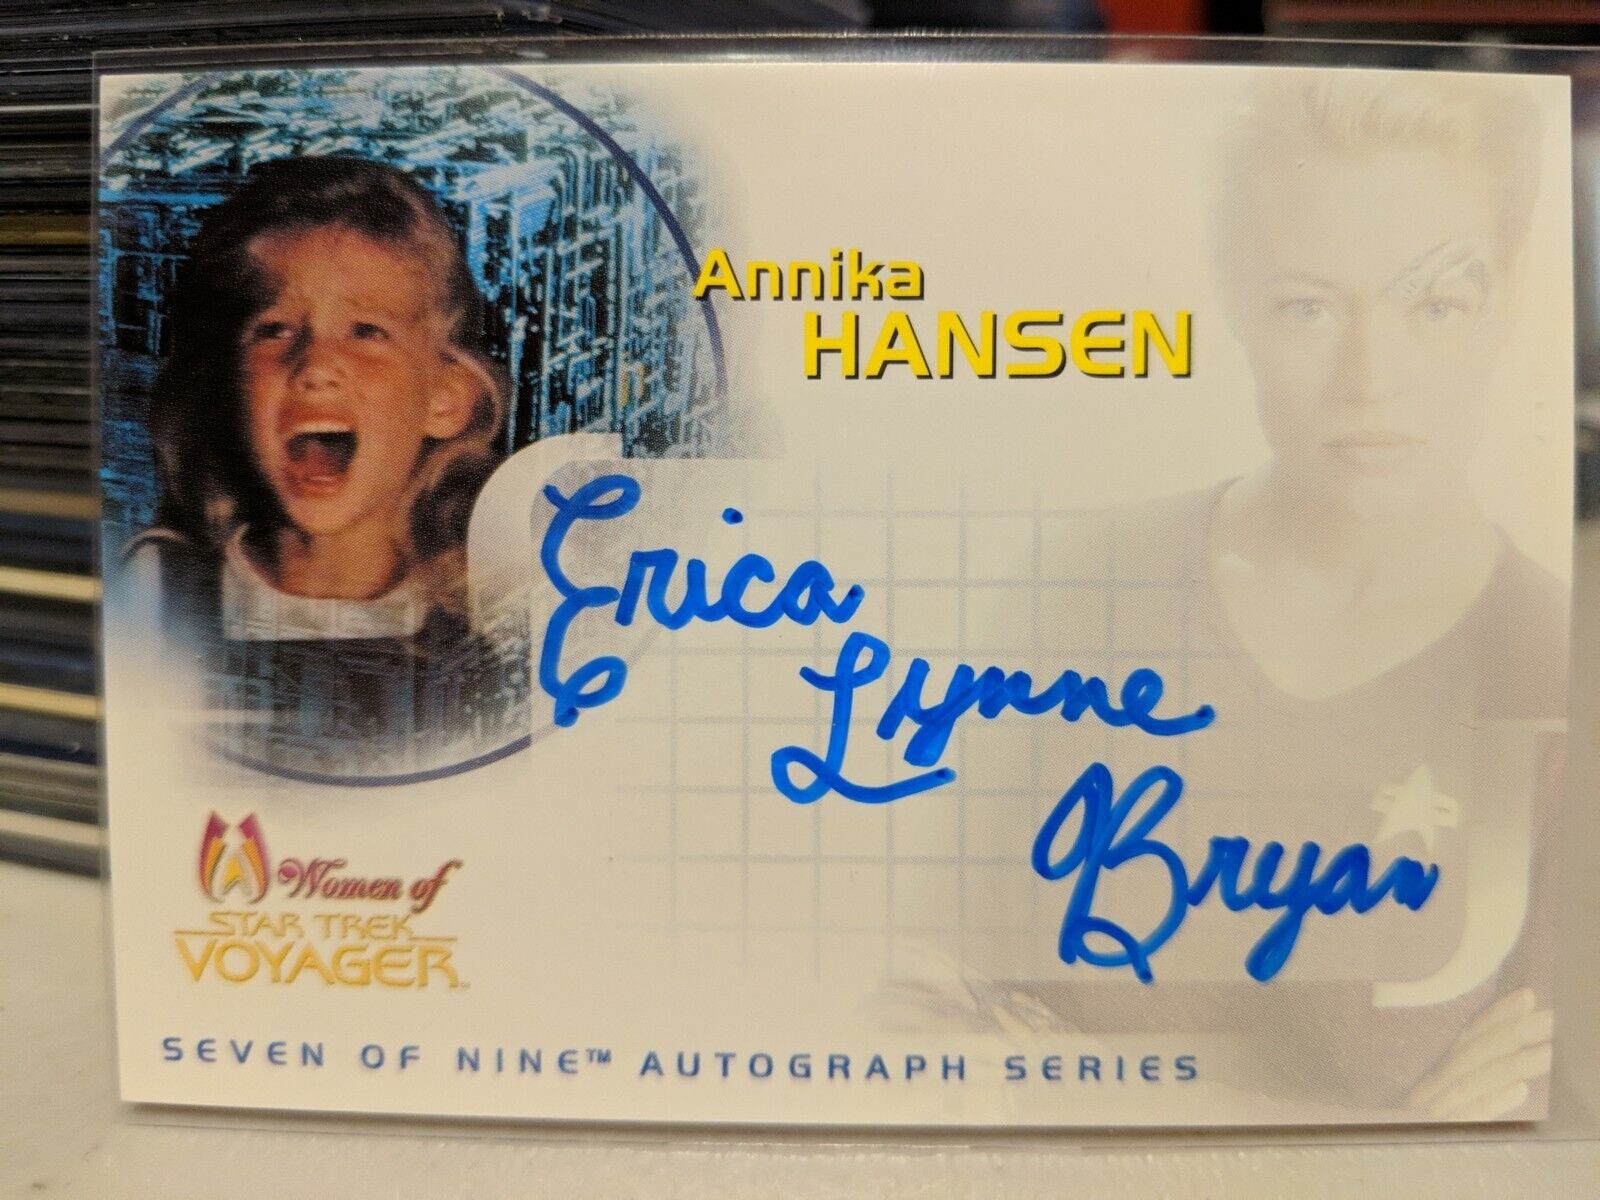 Women Of Star Trek Voyager Erica Lynne Bryan SA3 Autograph Card as Annika Hansen